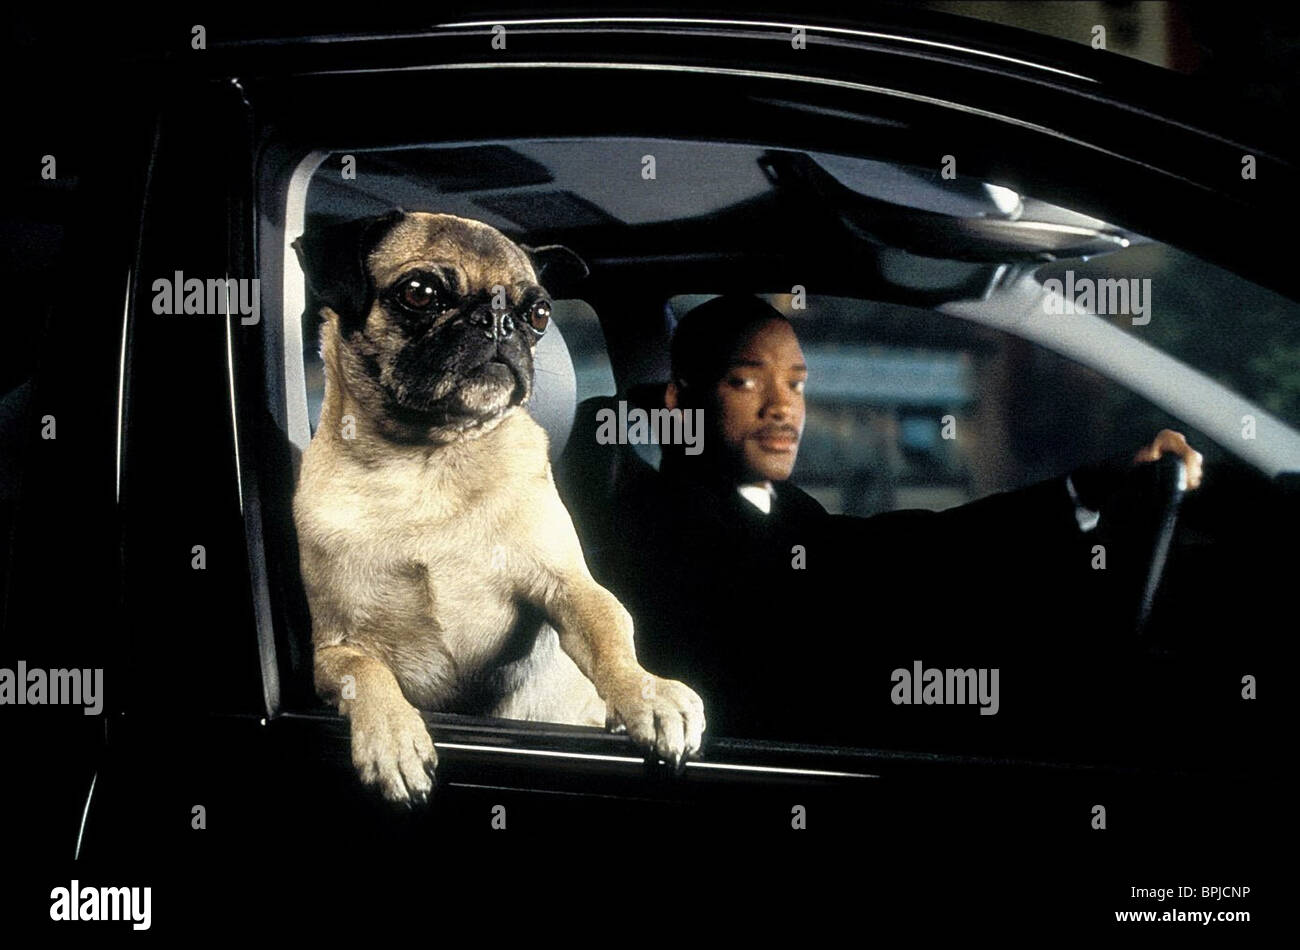 FRANK DER MOPS, Will Smith, MEN IN BLACK II, 2002 Stockfotografie - Alamy